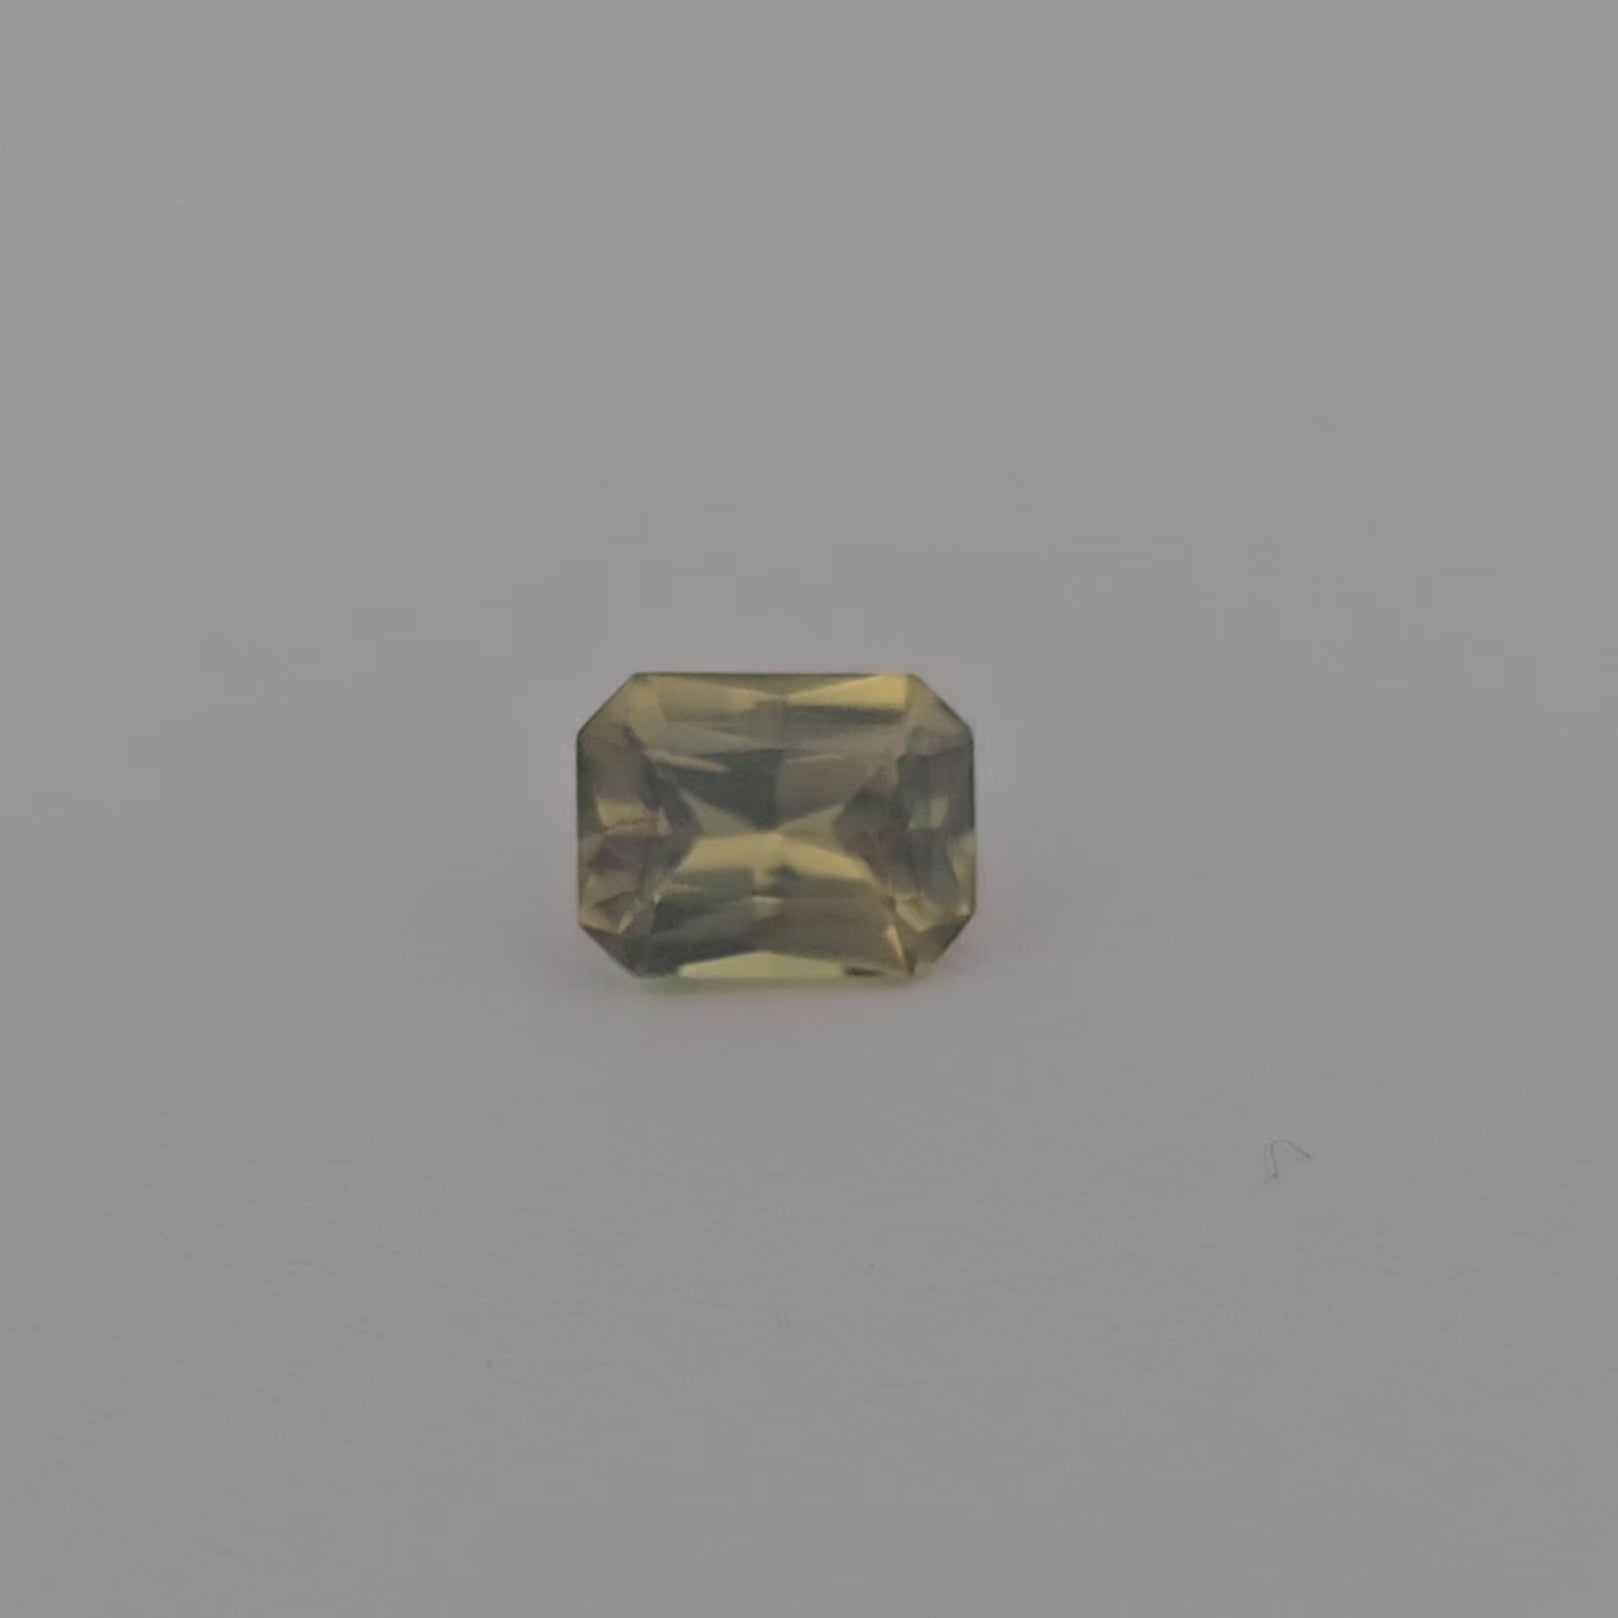 loose Natural Yellow Sapphire Stone 1.11 Carats Emerald Cut 7 x 5.5 mm